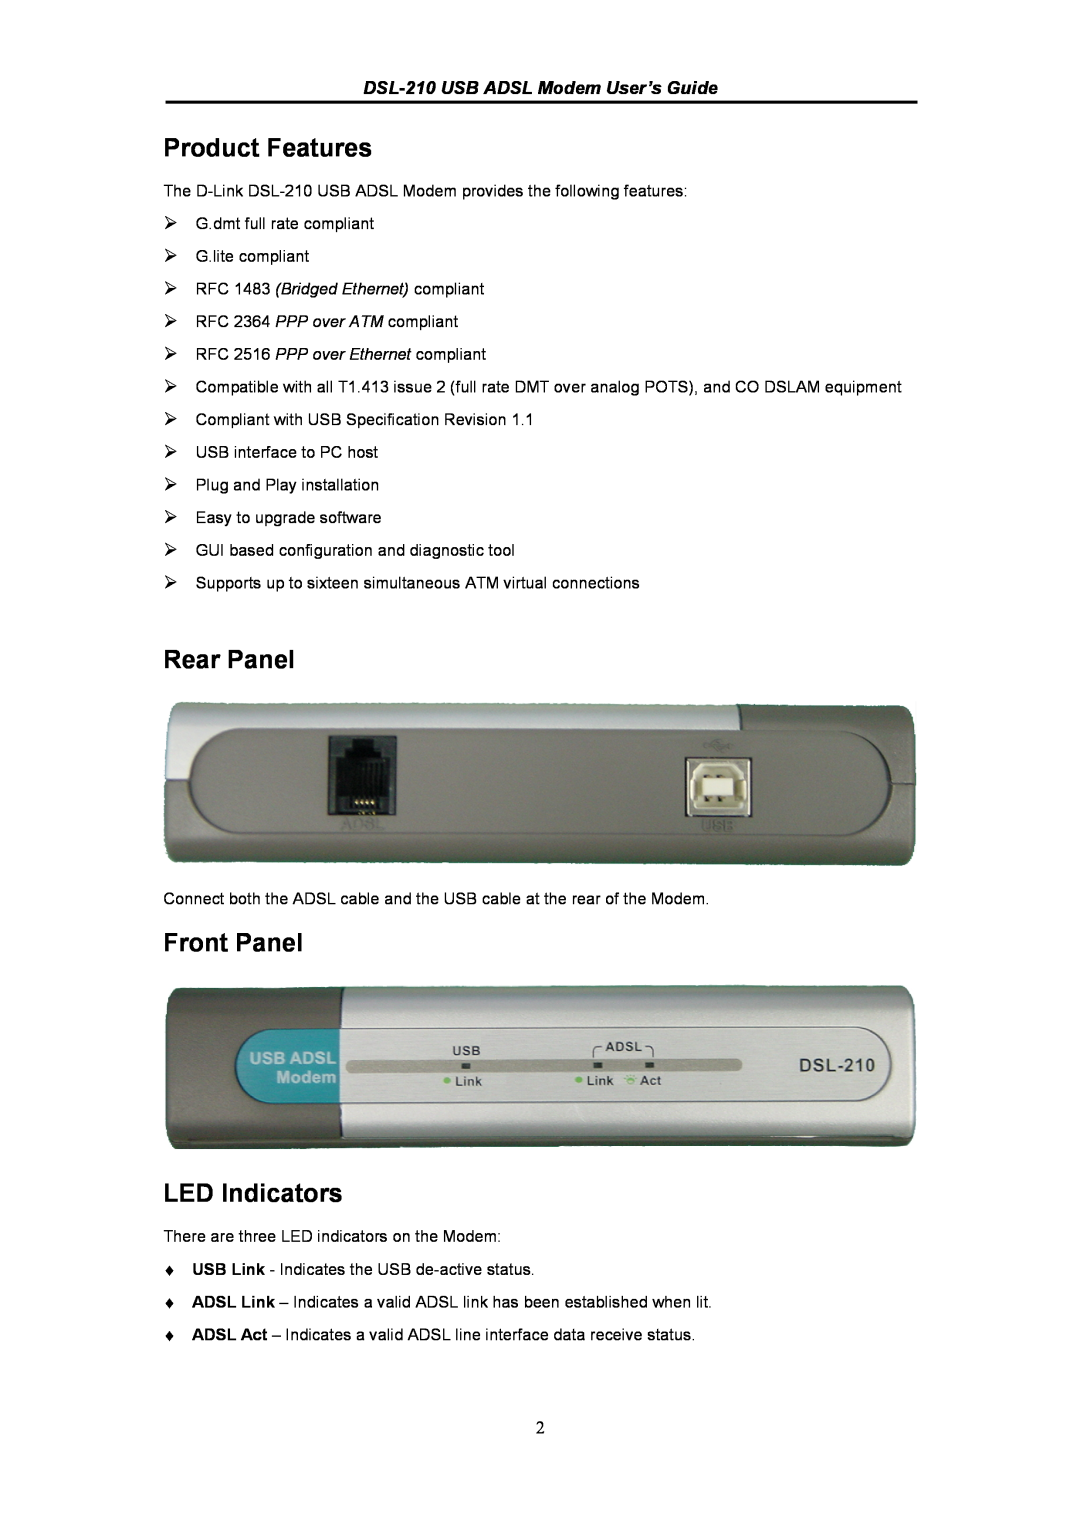 D-Link manual Product Features, Rear Panel, Front Panel LED Indicators, DSL-210 USB ADSL Modem User’s Guide 